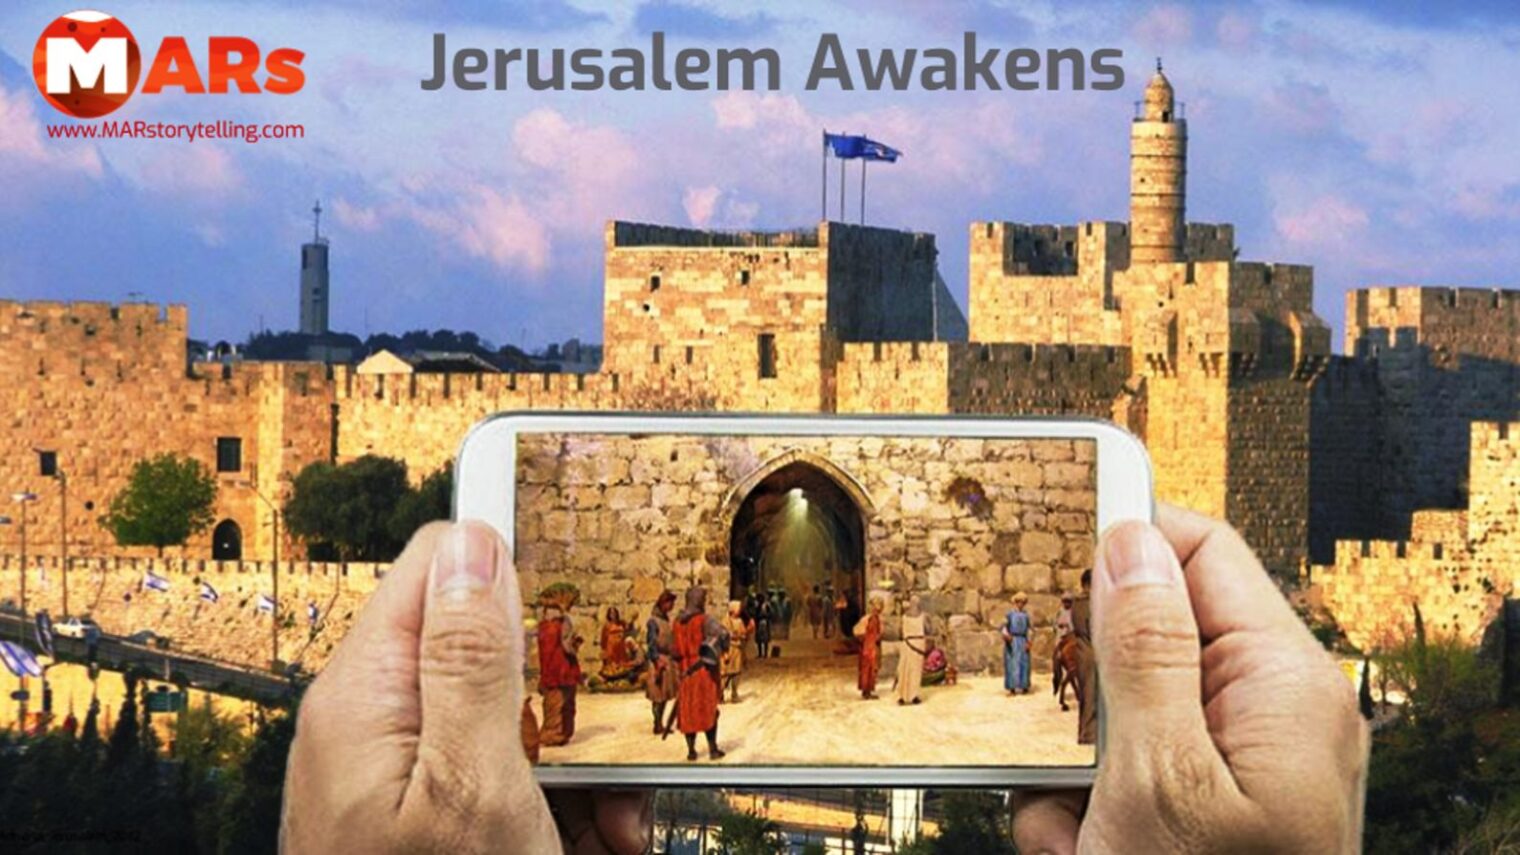 MARstorytelling’s “Jerusalem Awakens” app adds augmented reality to walks around Jerusalem. Photo credit: Hila Noam, Adriana Lobba, Tamar Hayardeni